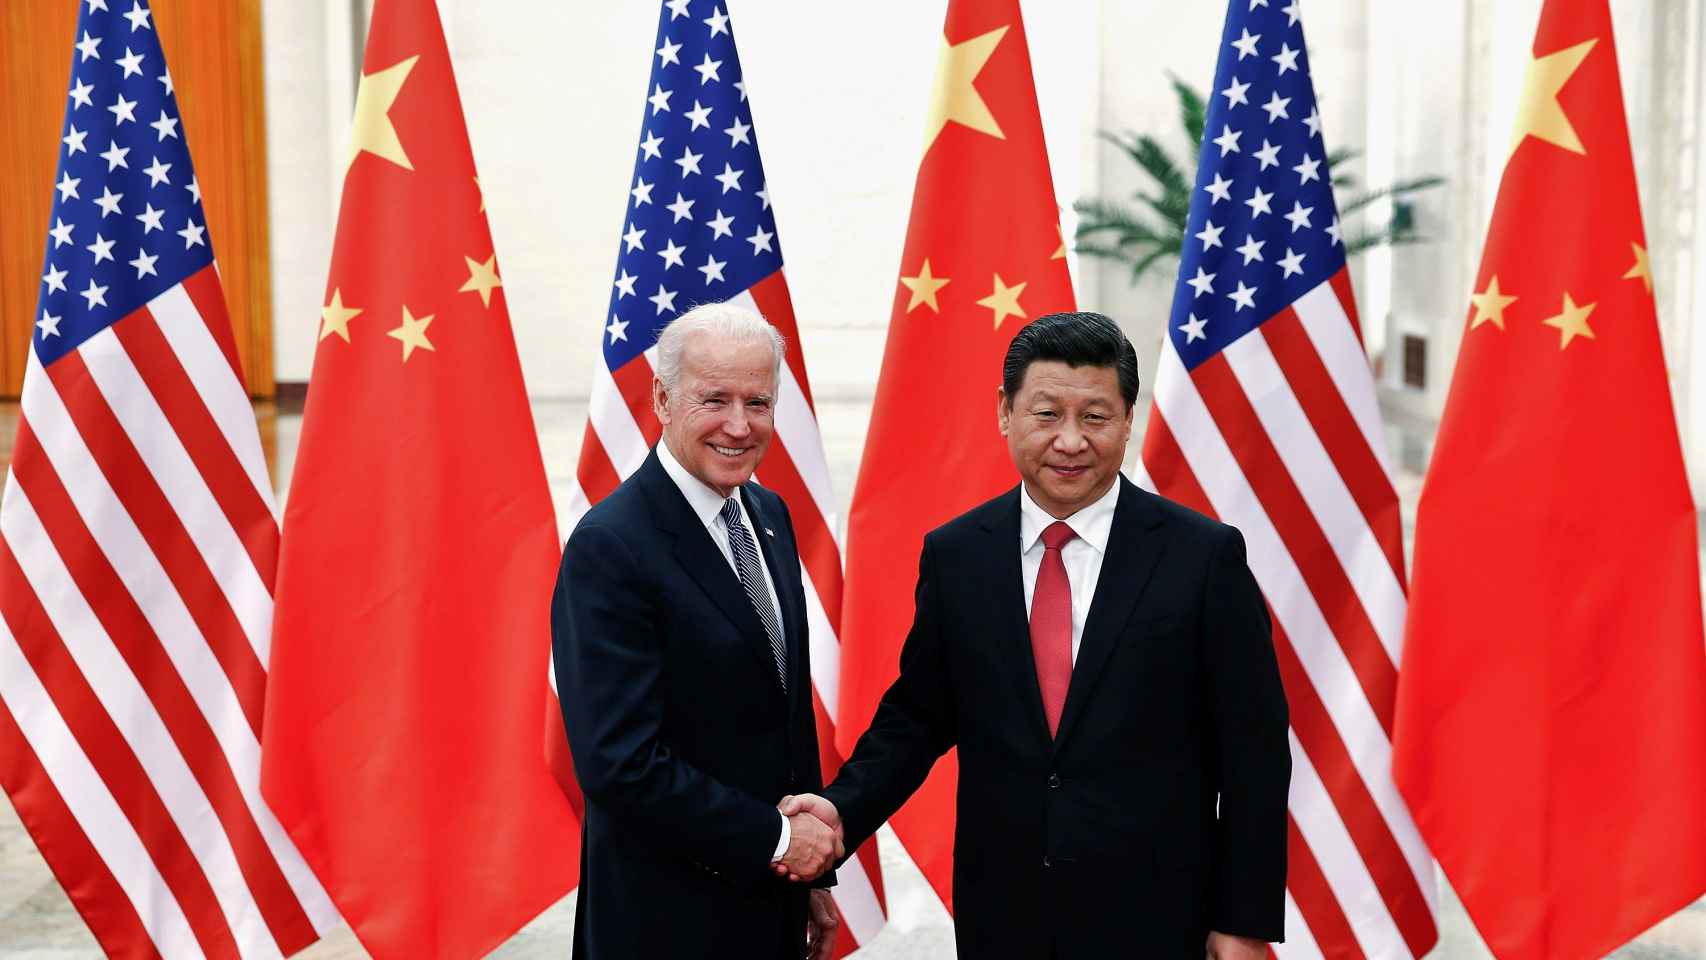 Los presidentes Joe Biden (izqda) y Xi Jinping (dcha).